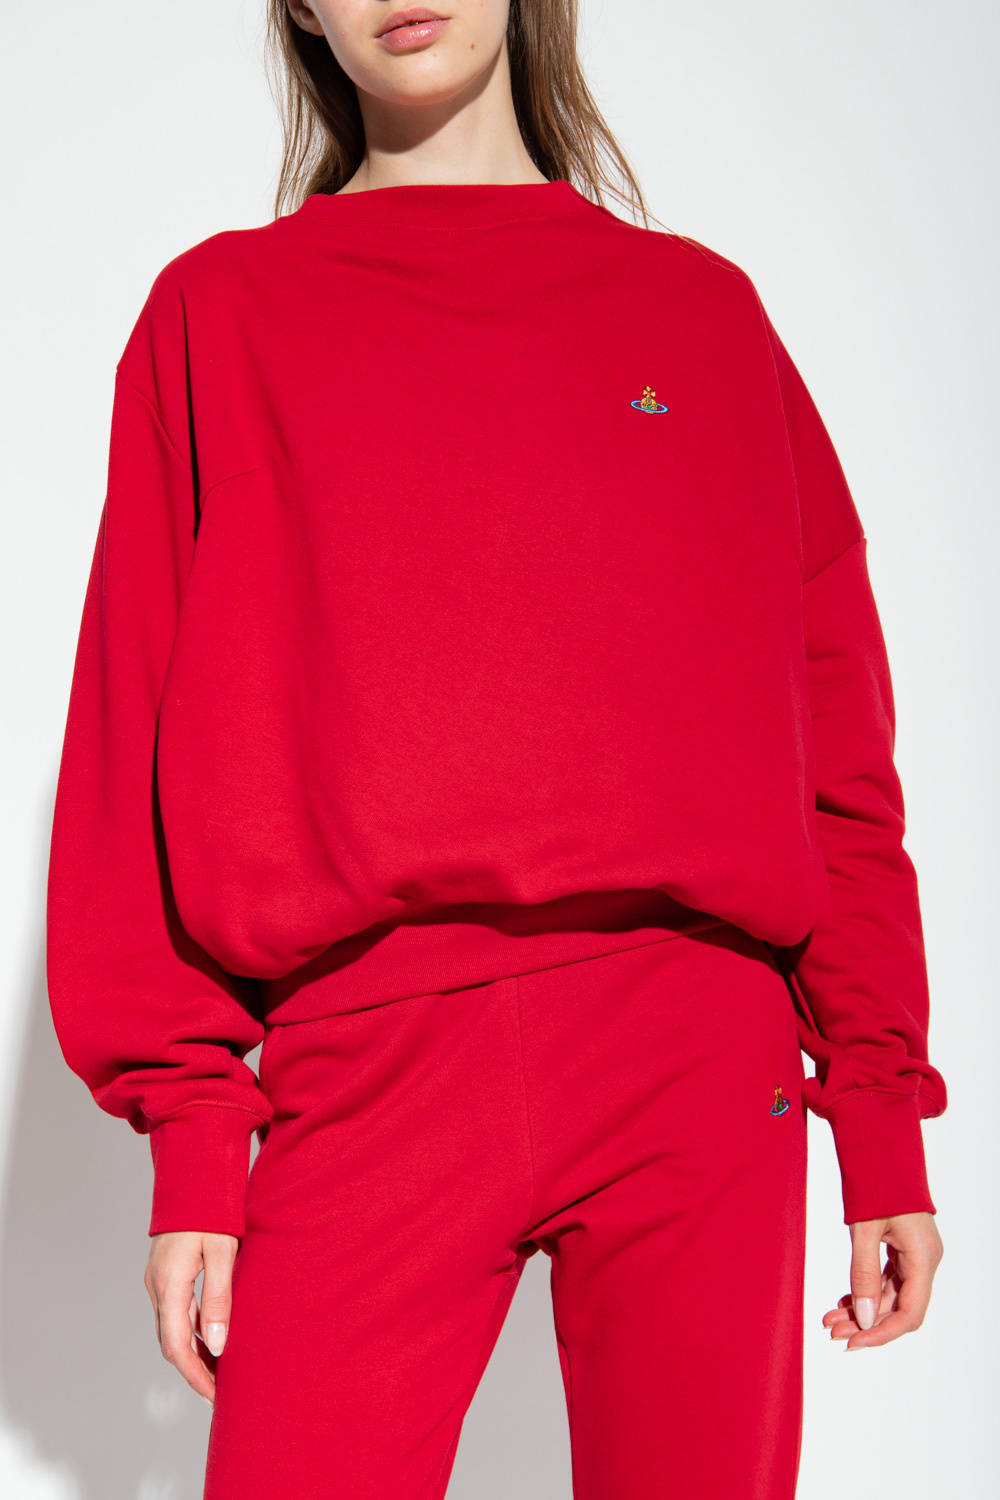 Vivienne Westwood ‘Drunken’ sweatshirt